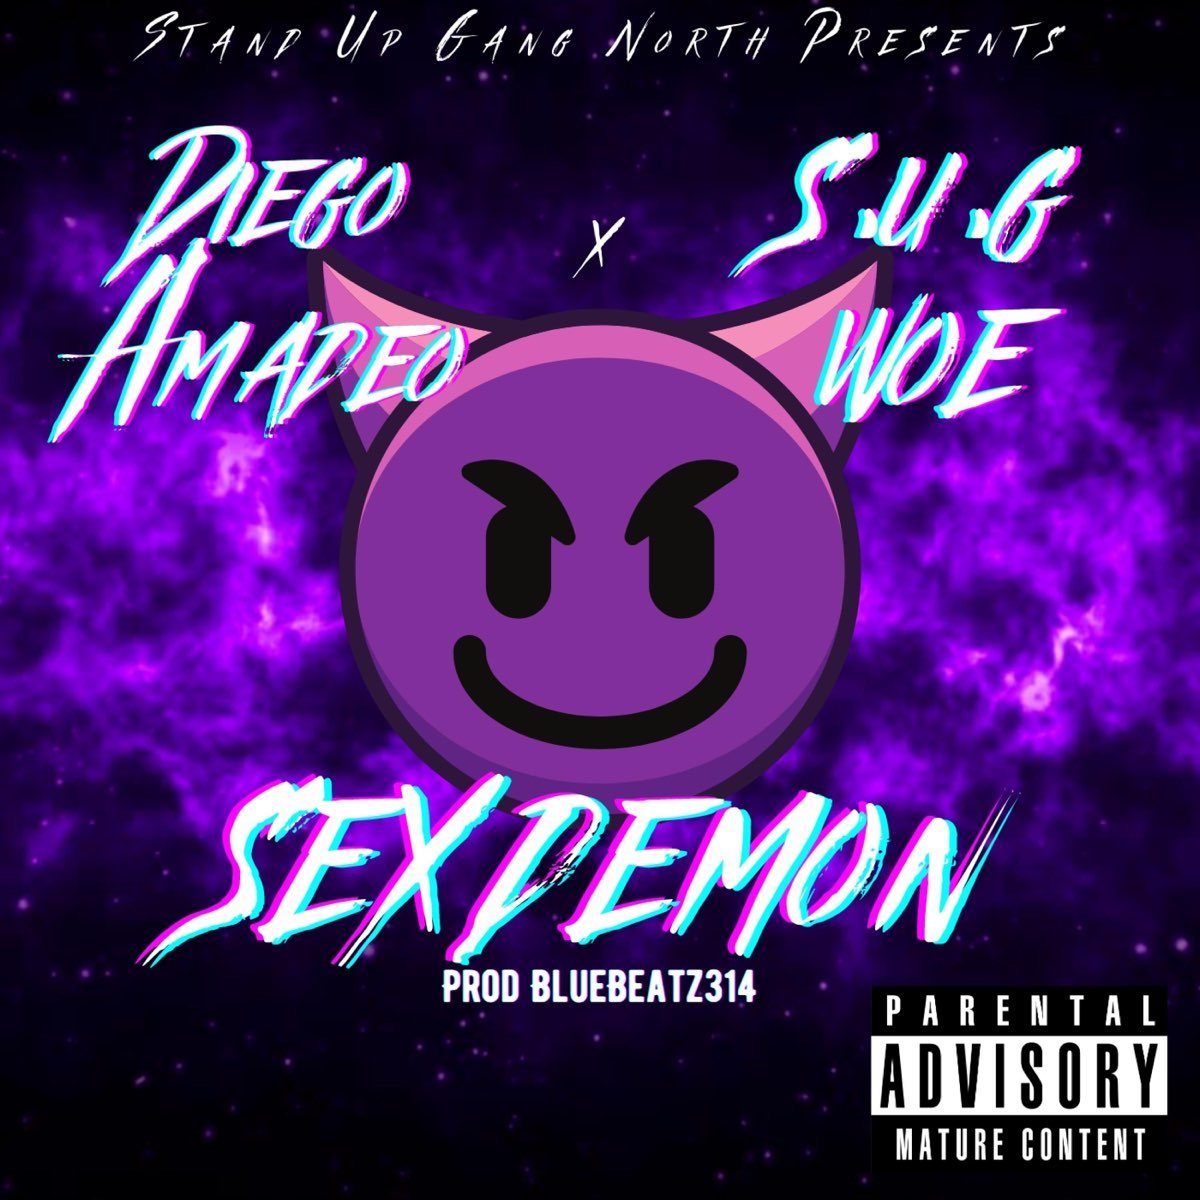 ‎sex Demon Feat Diego Amadeo And Sug Woe Single Album Par